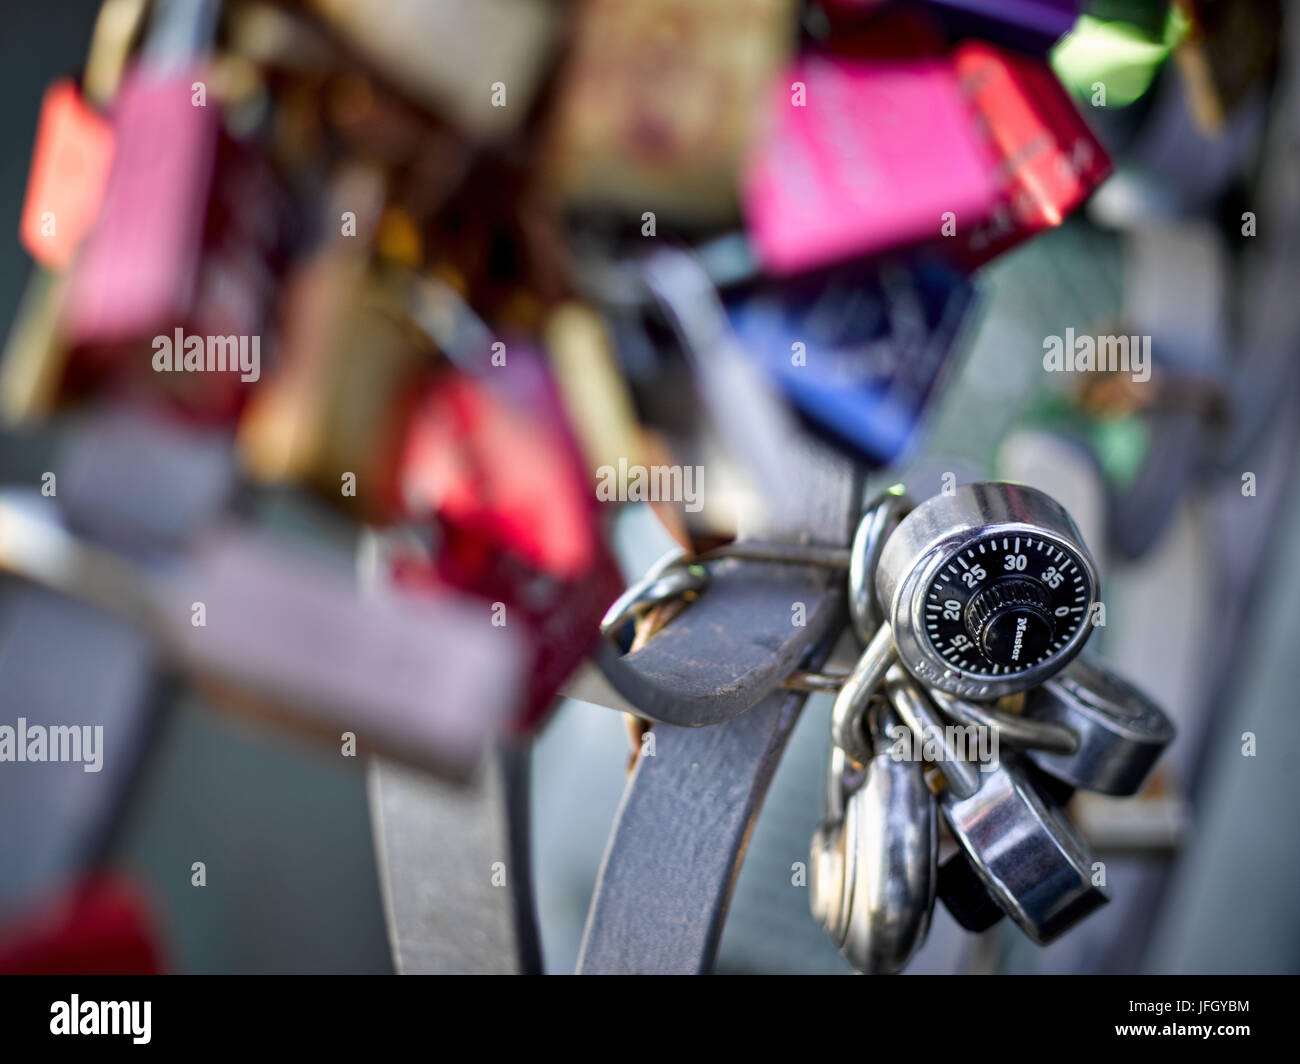 Locks as a dear icon in balustrade Stock Photo